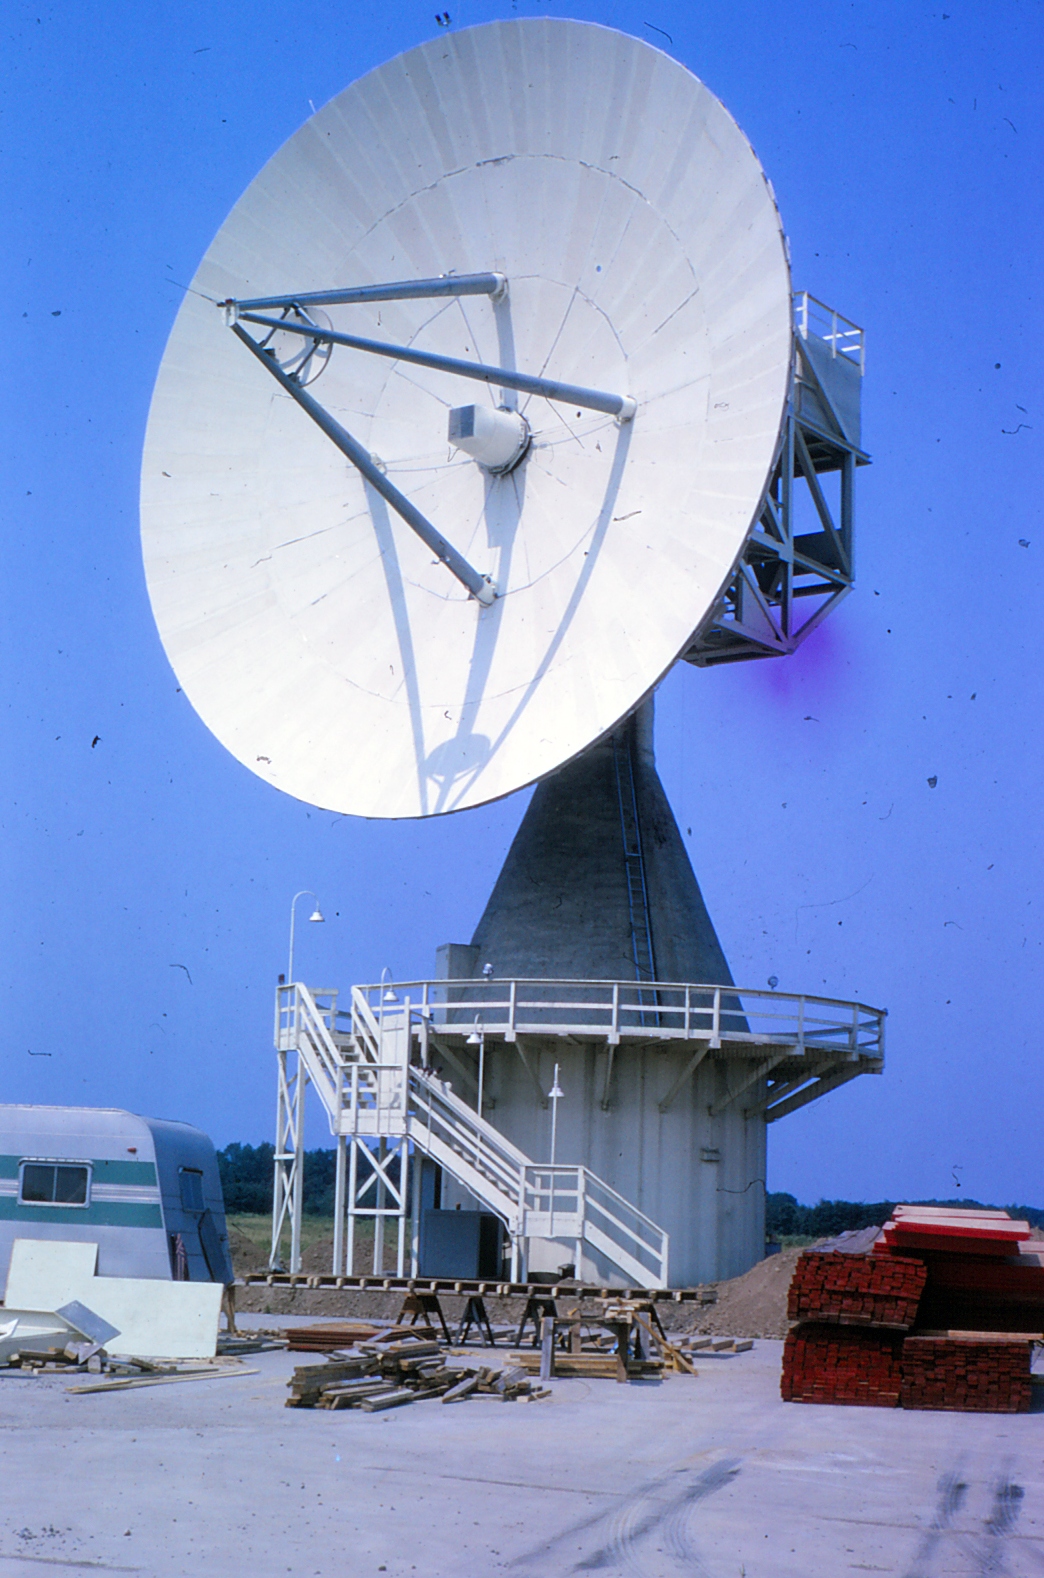 GRANDPA'S NAVY: Grandpa Built This Satellite Dome